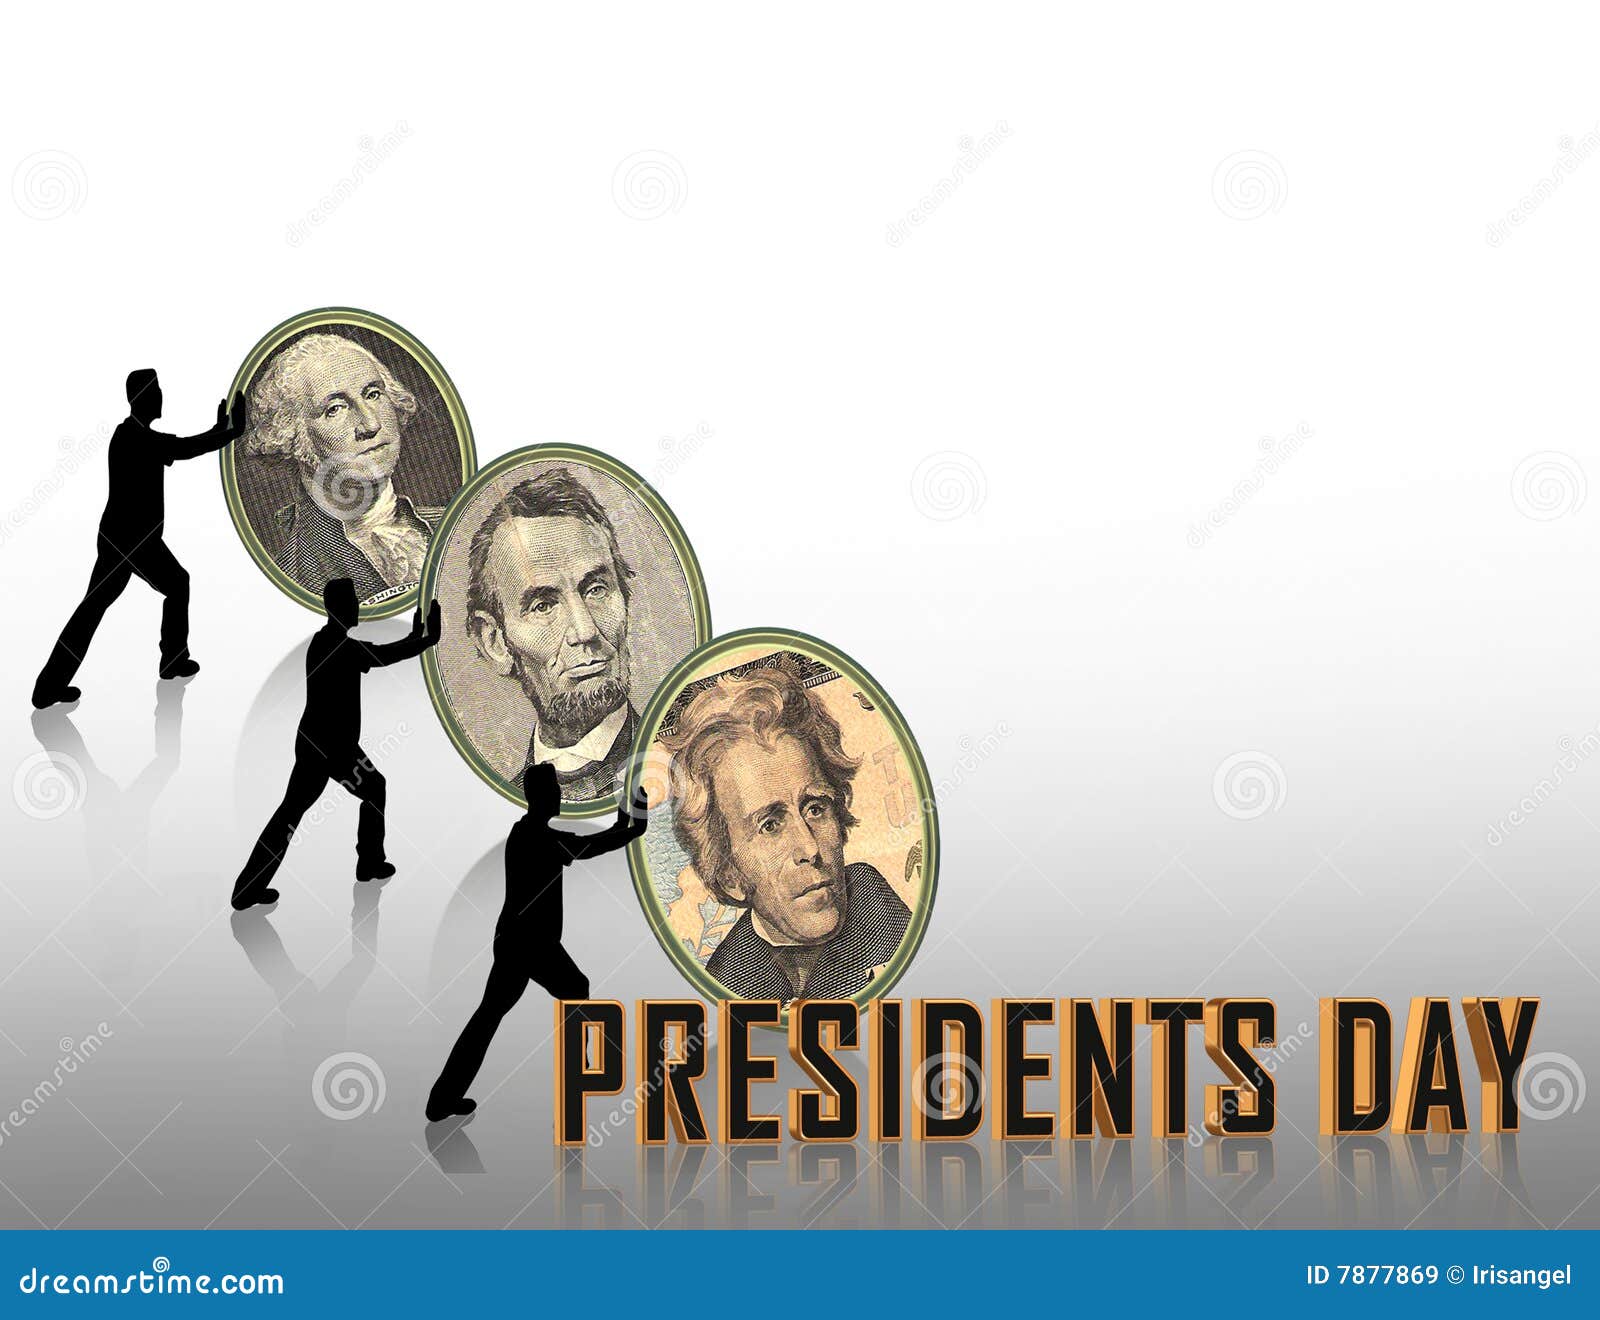 Presidents Day graphic stock illustration. Illustration of birthday - 78778691300 x 1089